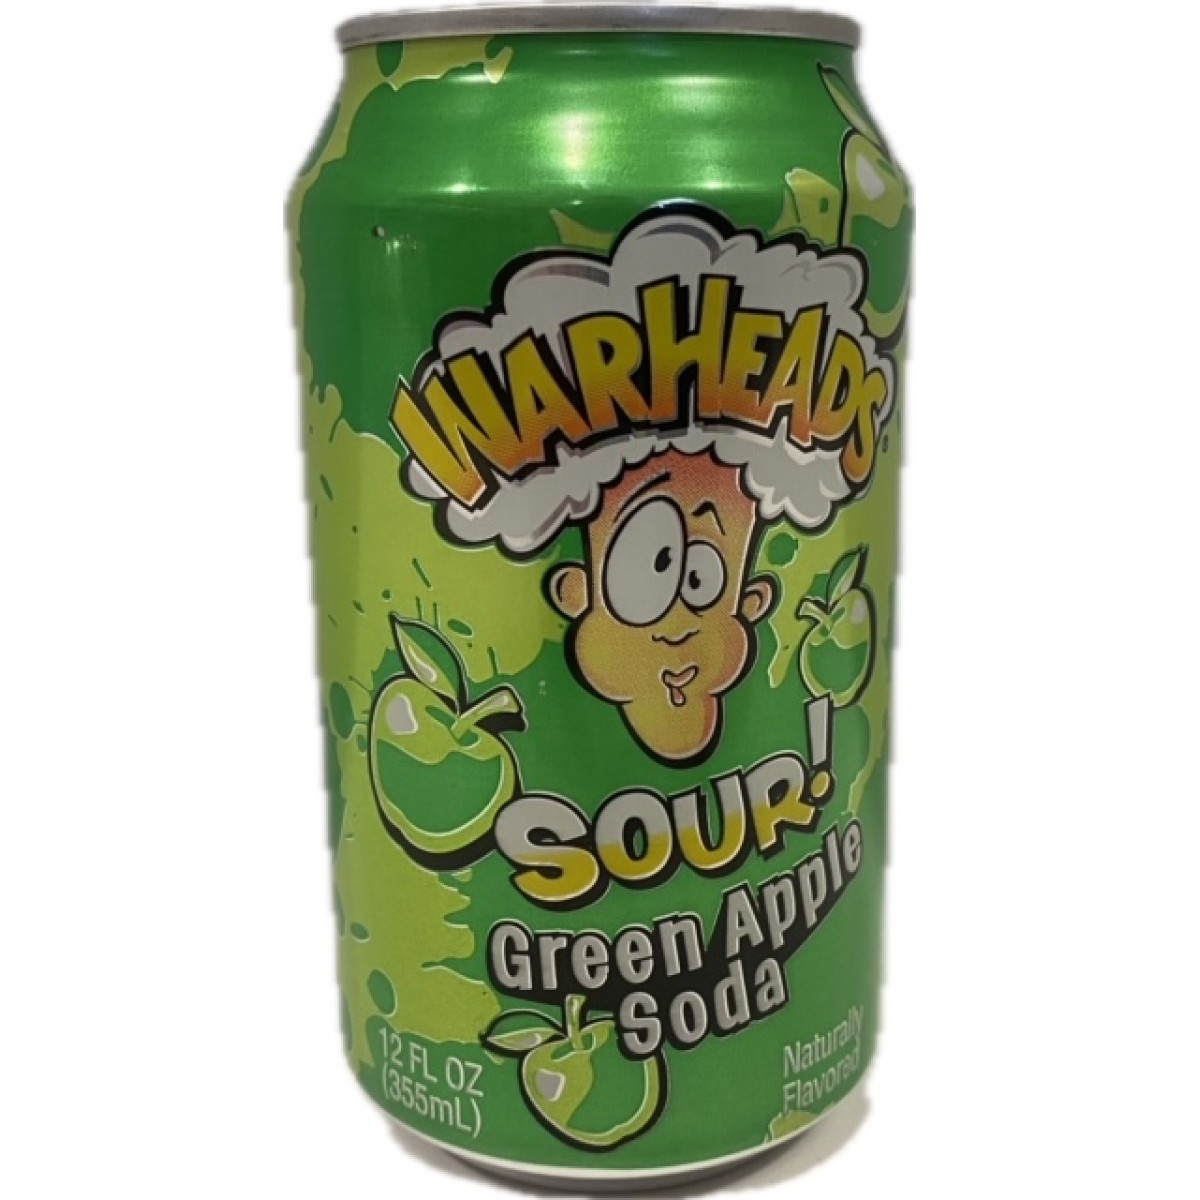 Warheads Green apple soda 35cl